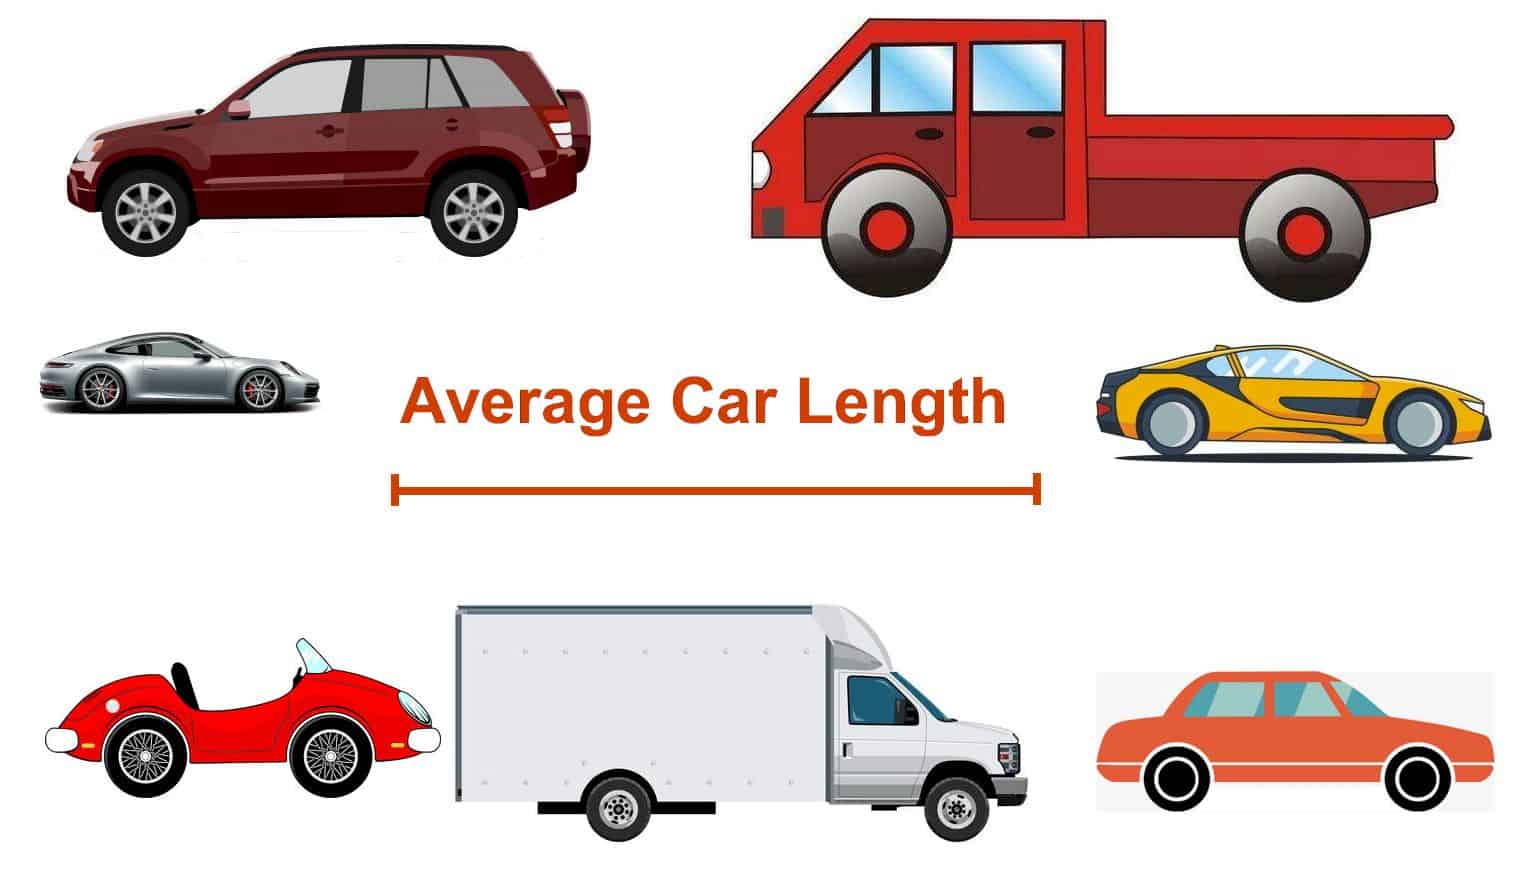 Average Car Length